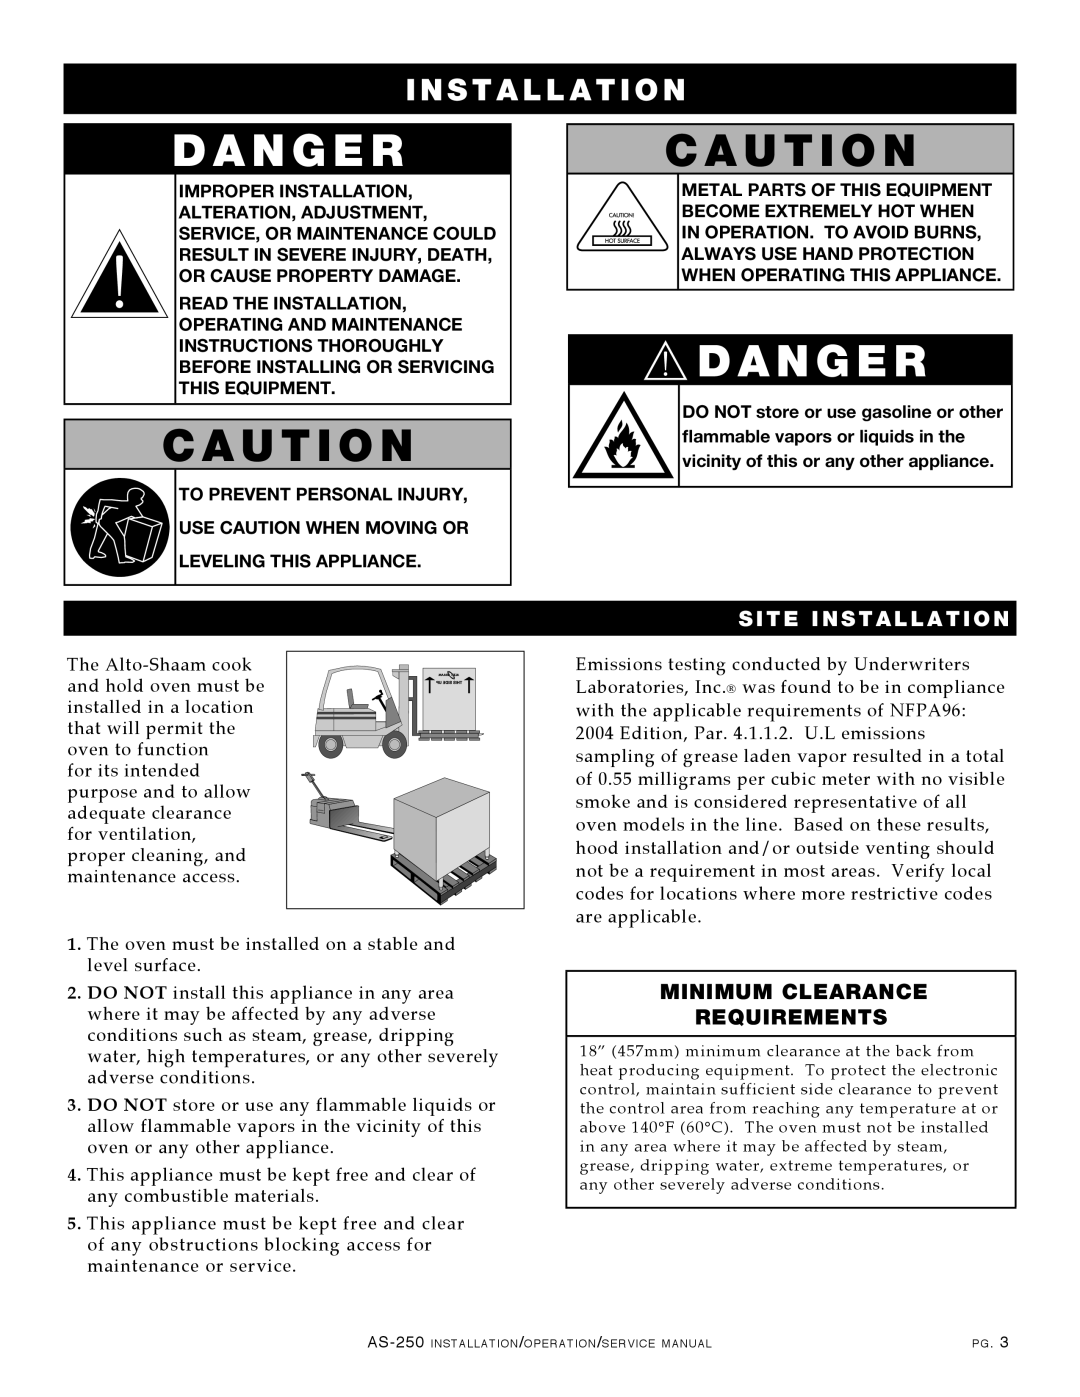 Alto-Shaam AS-250 manual Danger, I N S T A L L A T I O N, Site Installation, Minimum Clearance Requirements, D A N G E R 